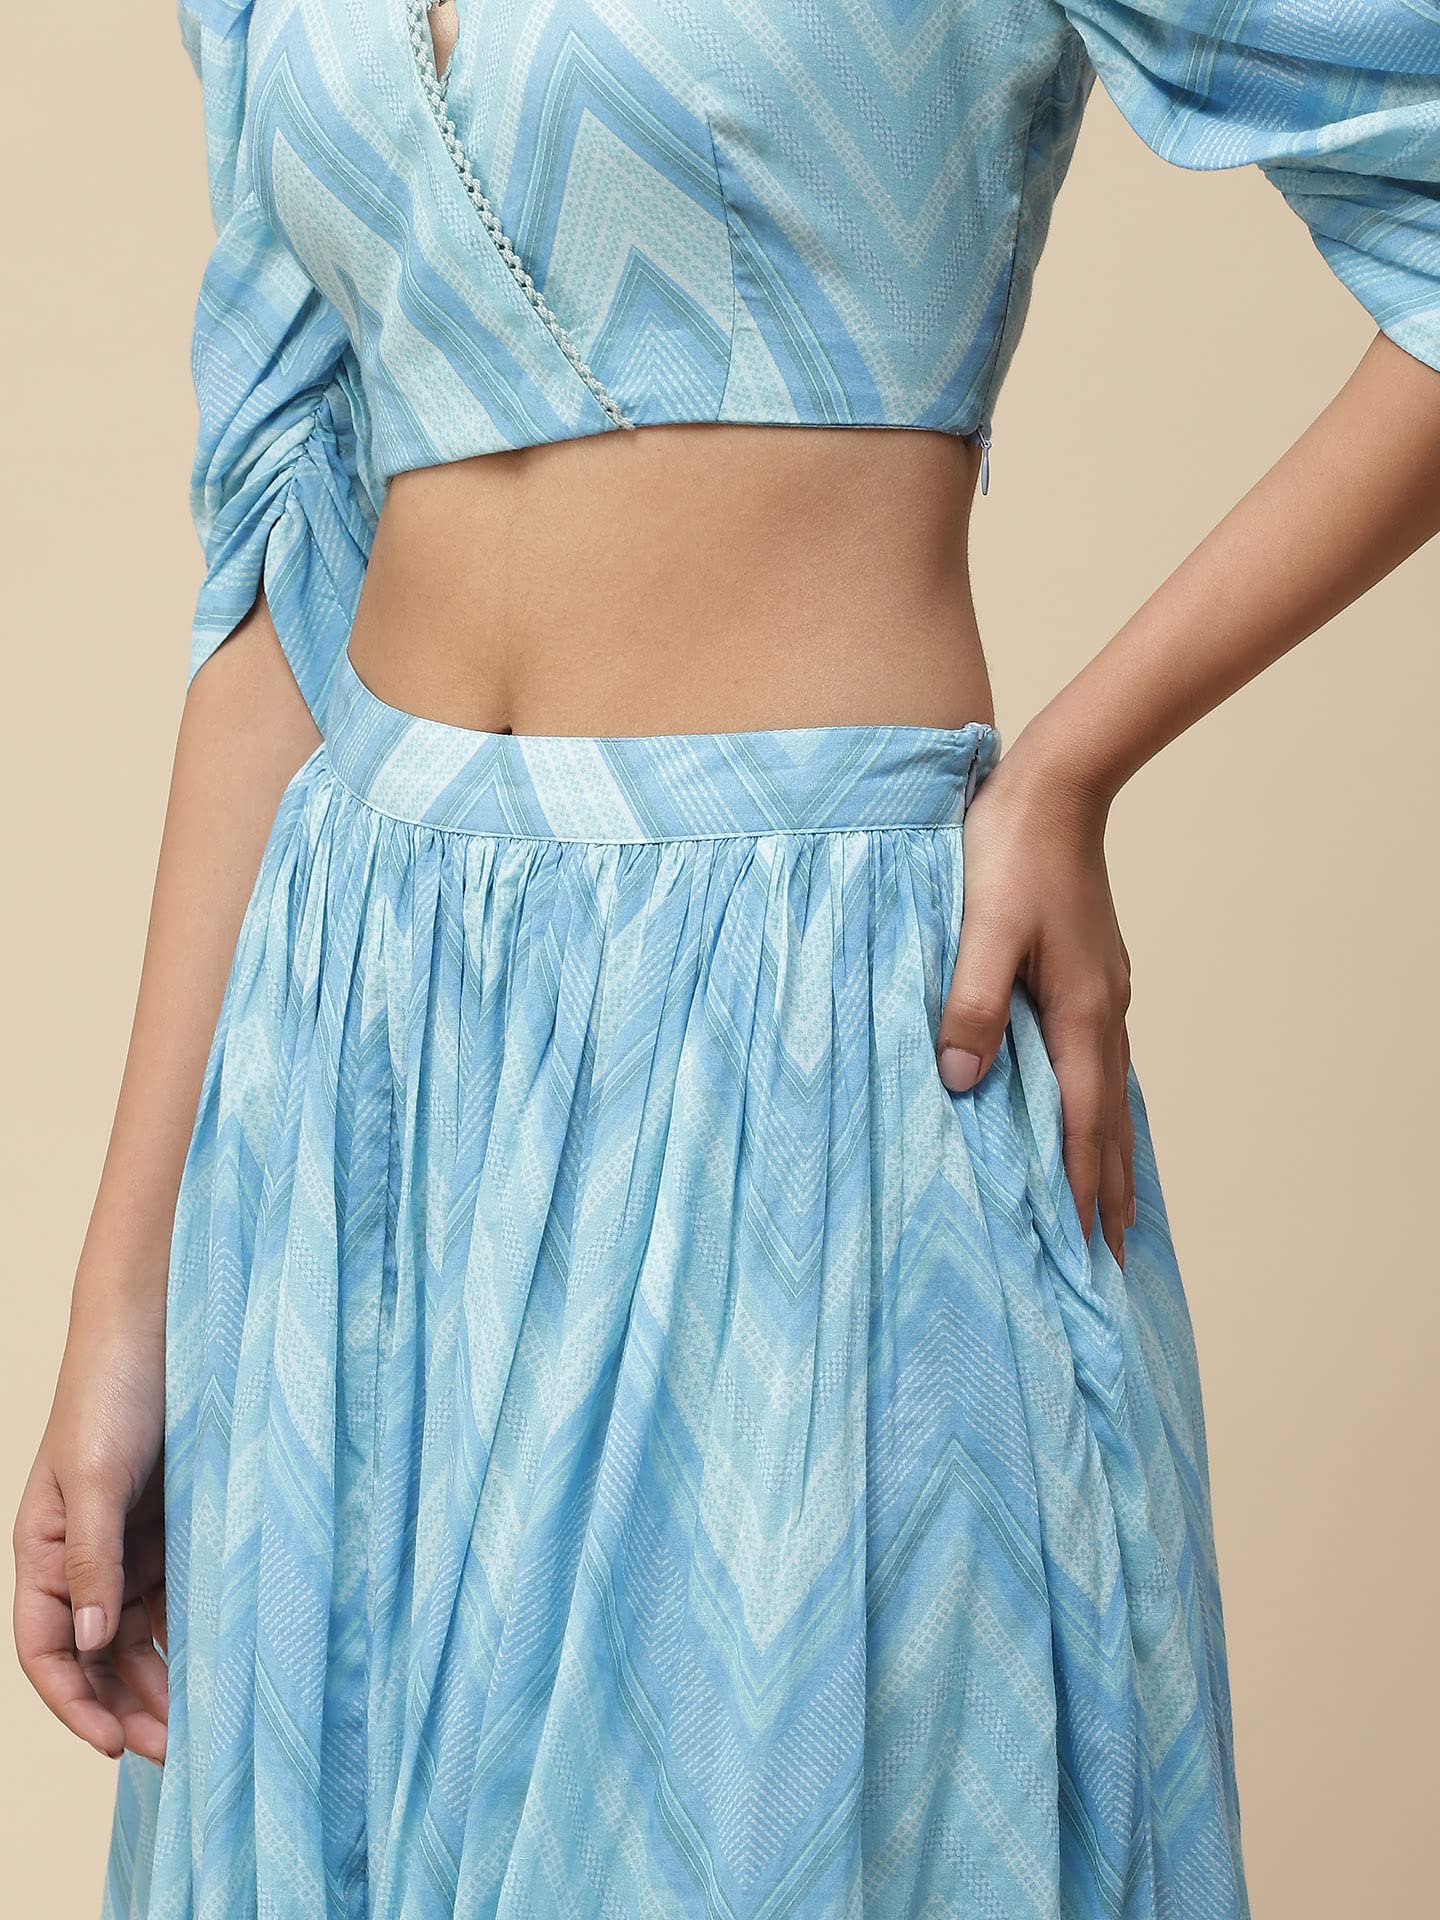 Aarke Ritu Kumar Blue Chevron Stripe Top with Skirt 